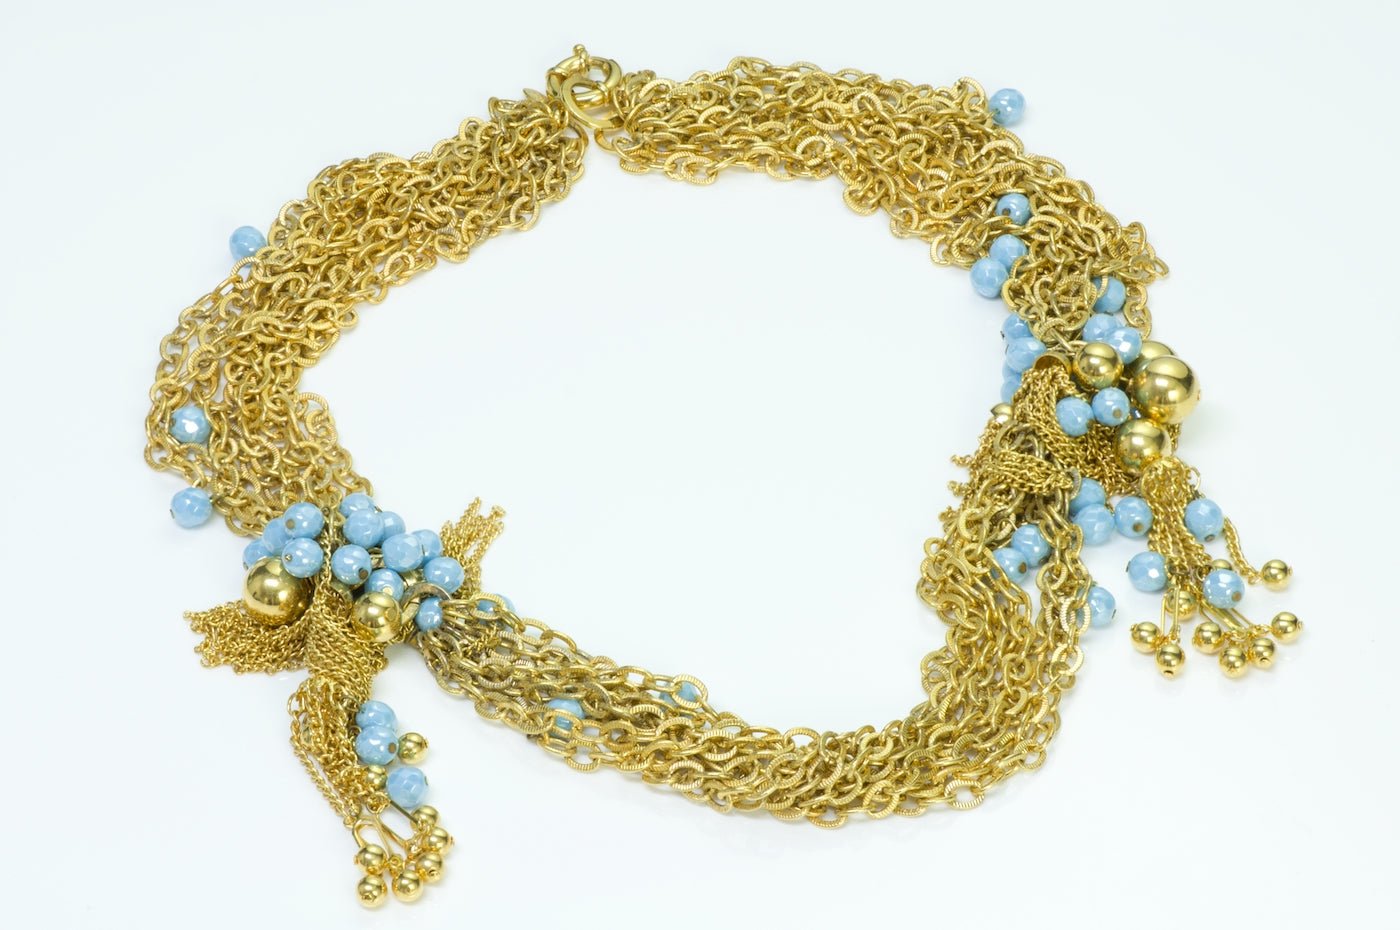 Robert Sorrell Originals Chain Necklace